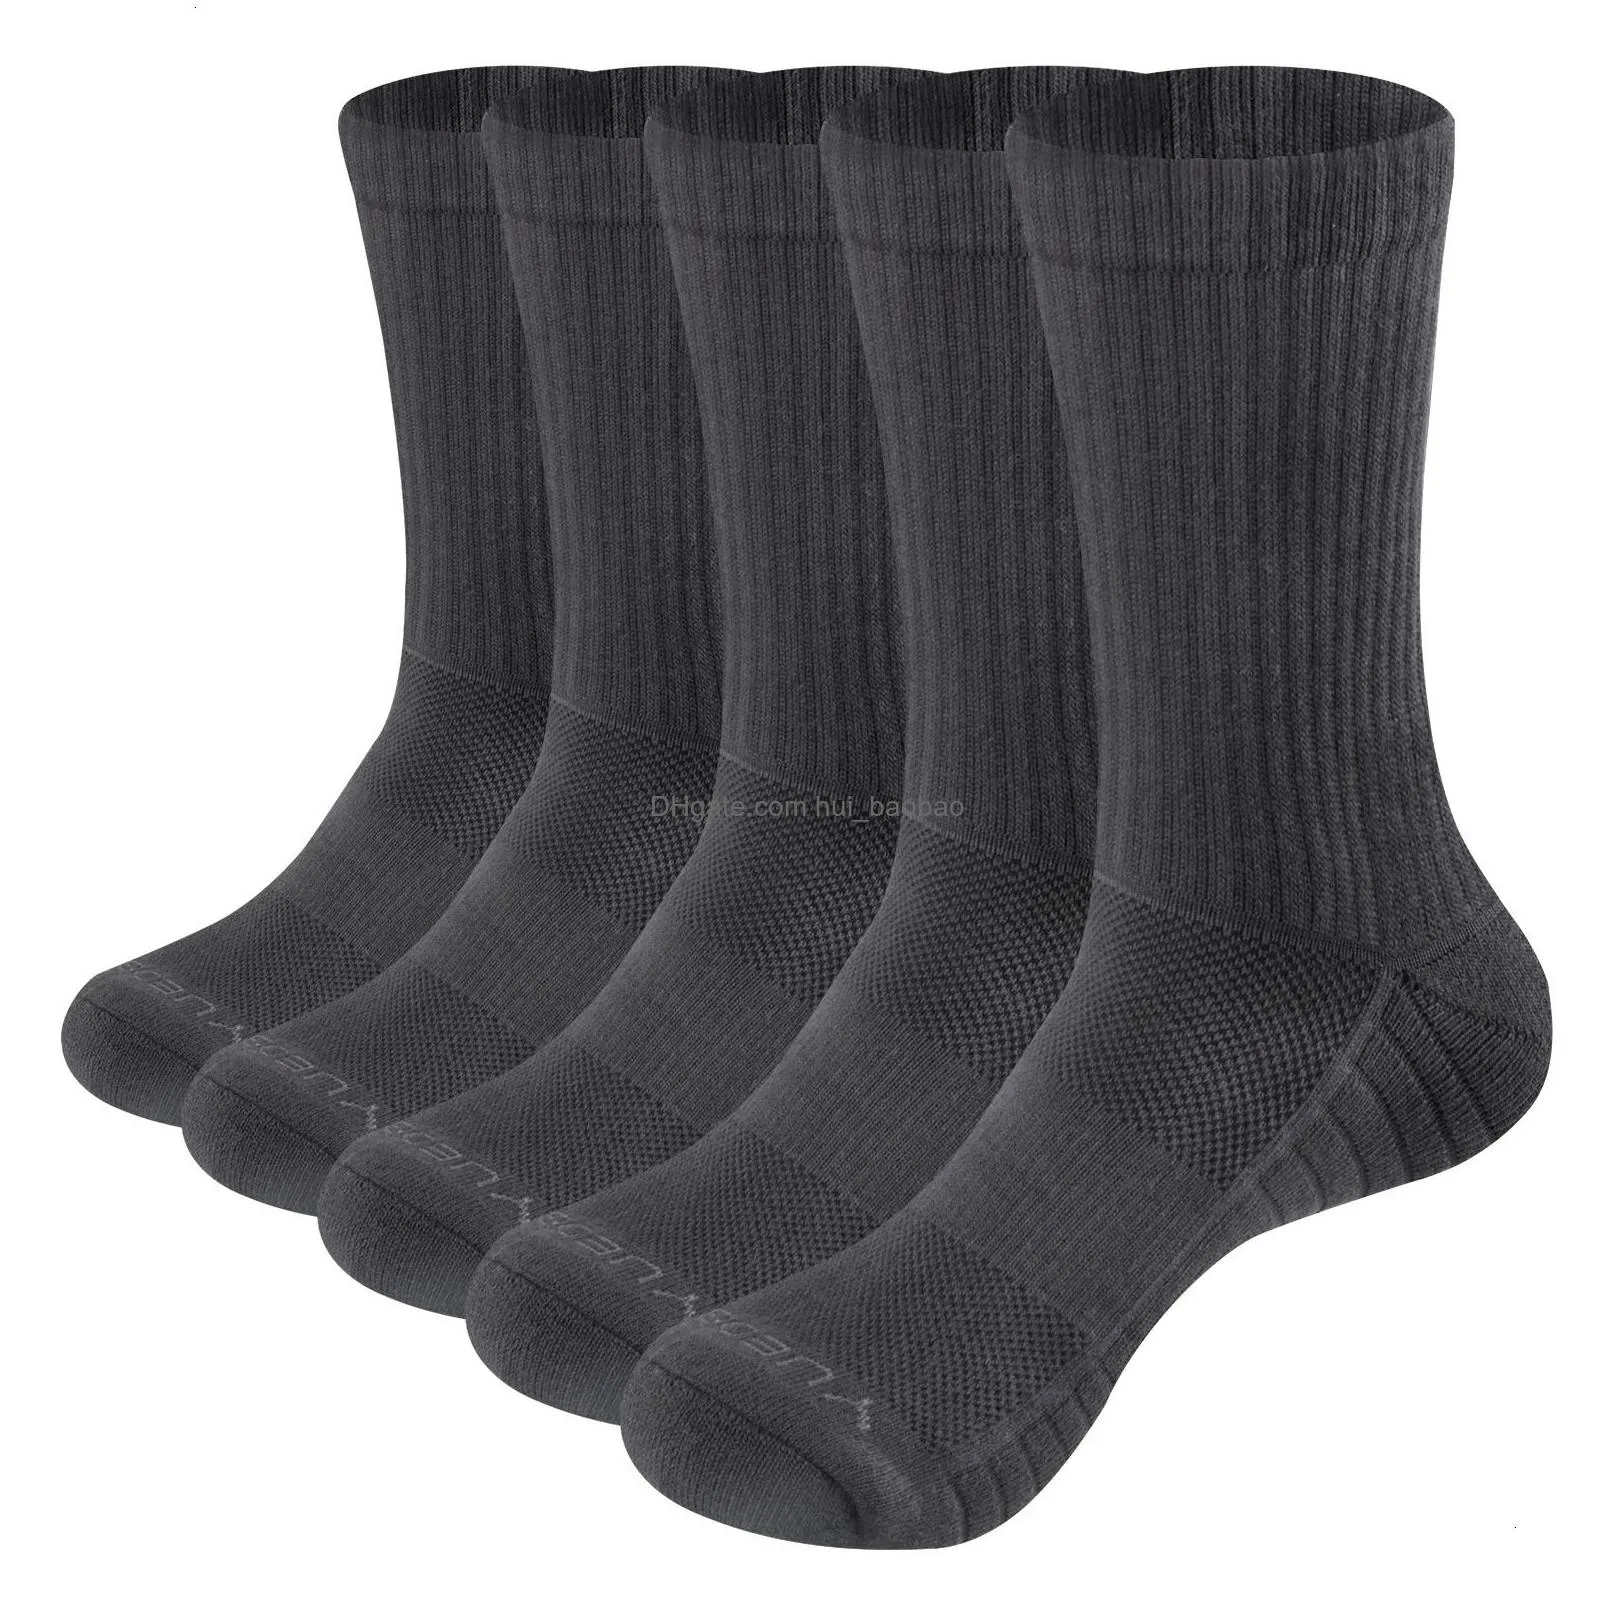 sports socks yuedge women socks white black warm cotton cushion cycling running training hiking athletic sports crew socks size 36-43 eu